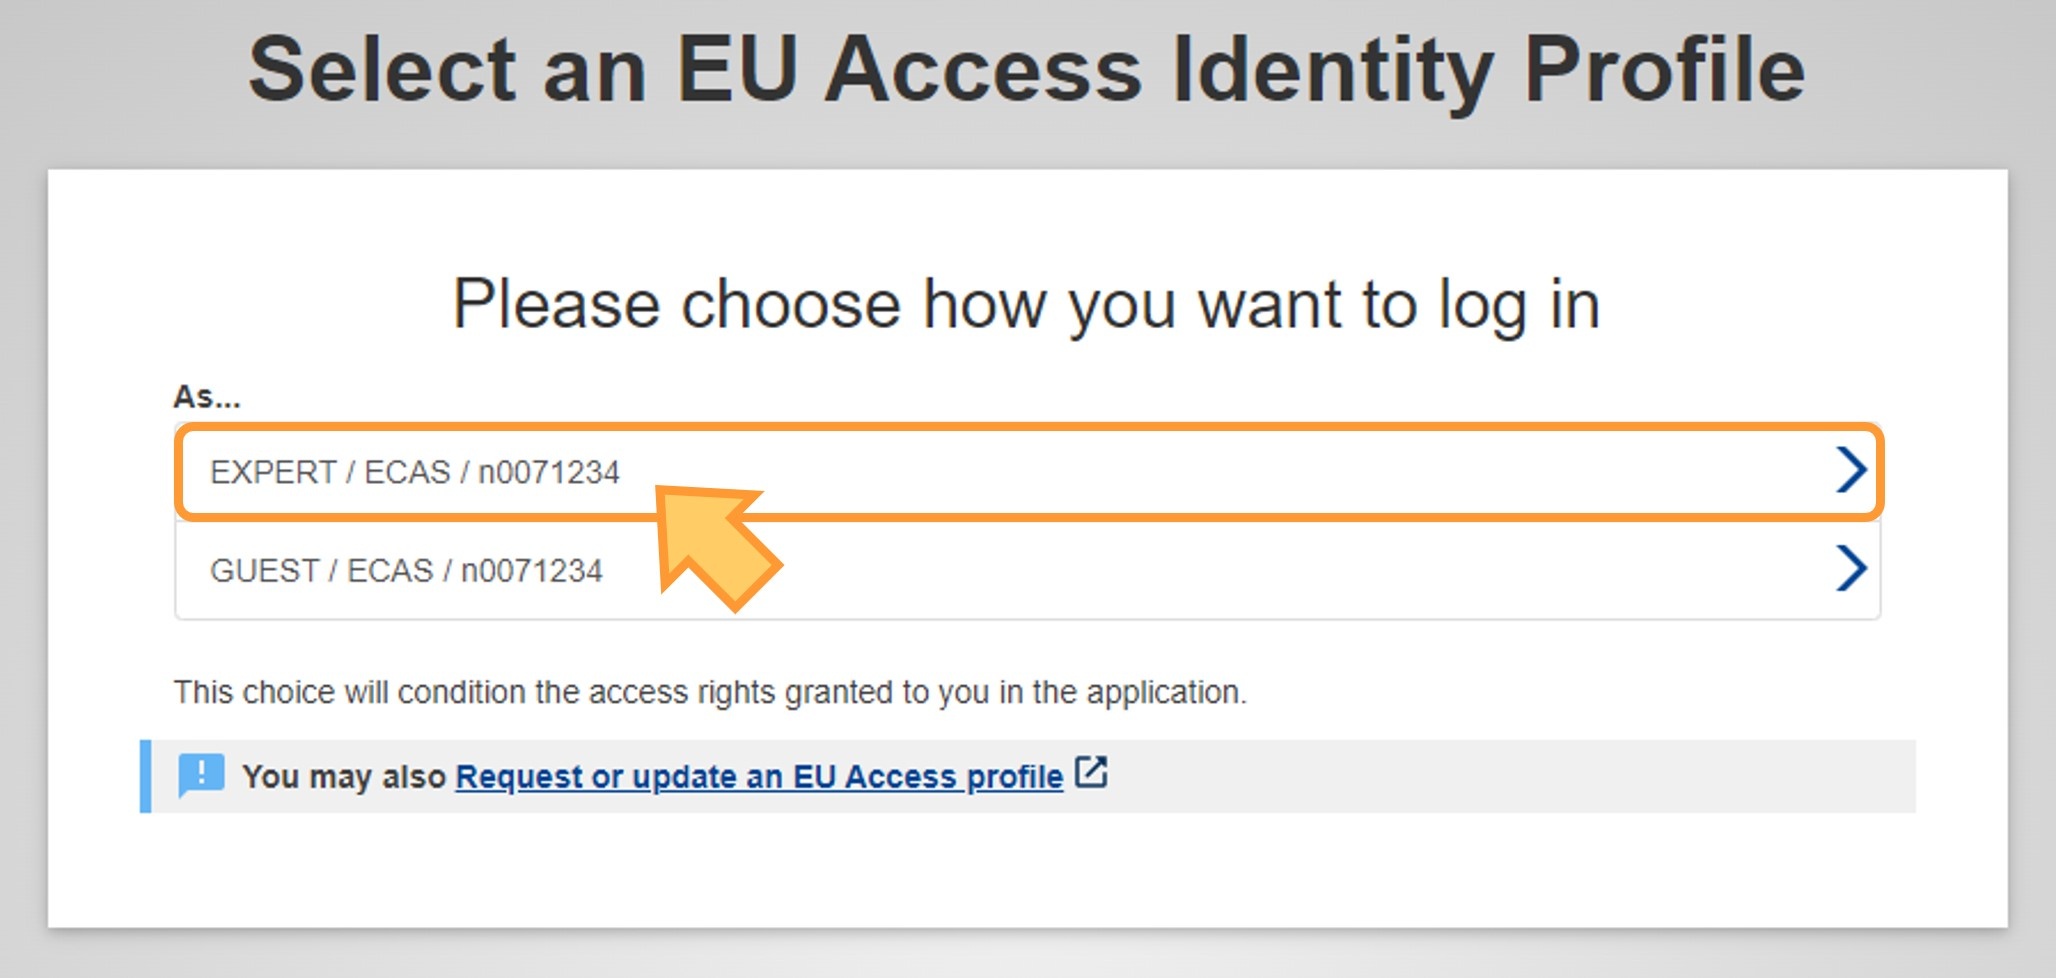 Select the expert EU Access Identity Profile